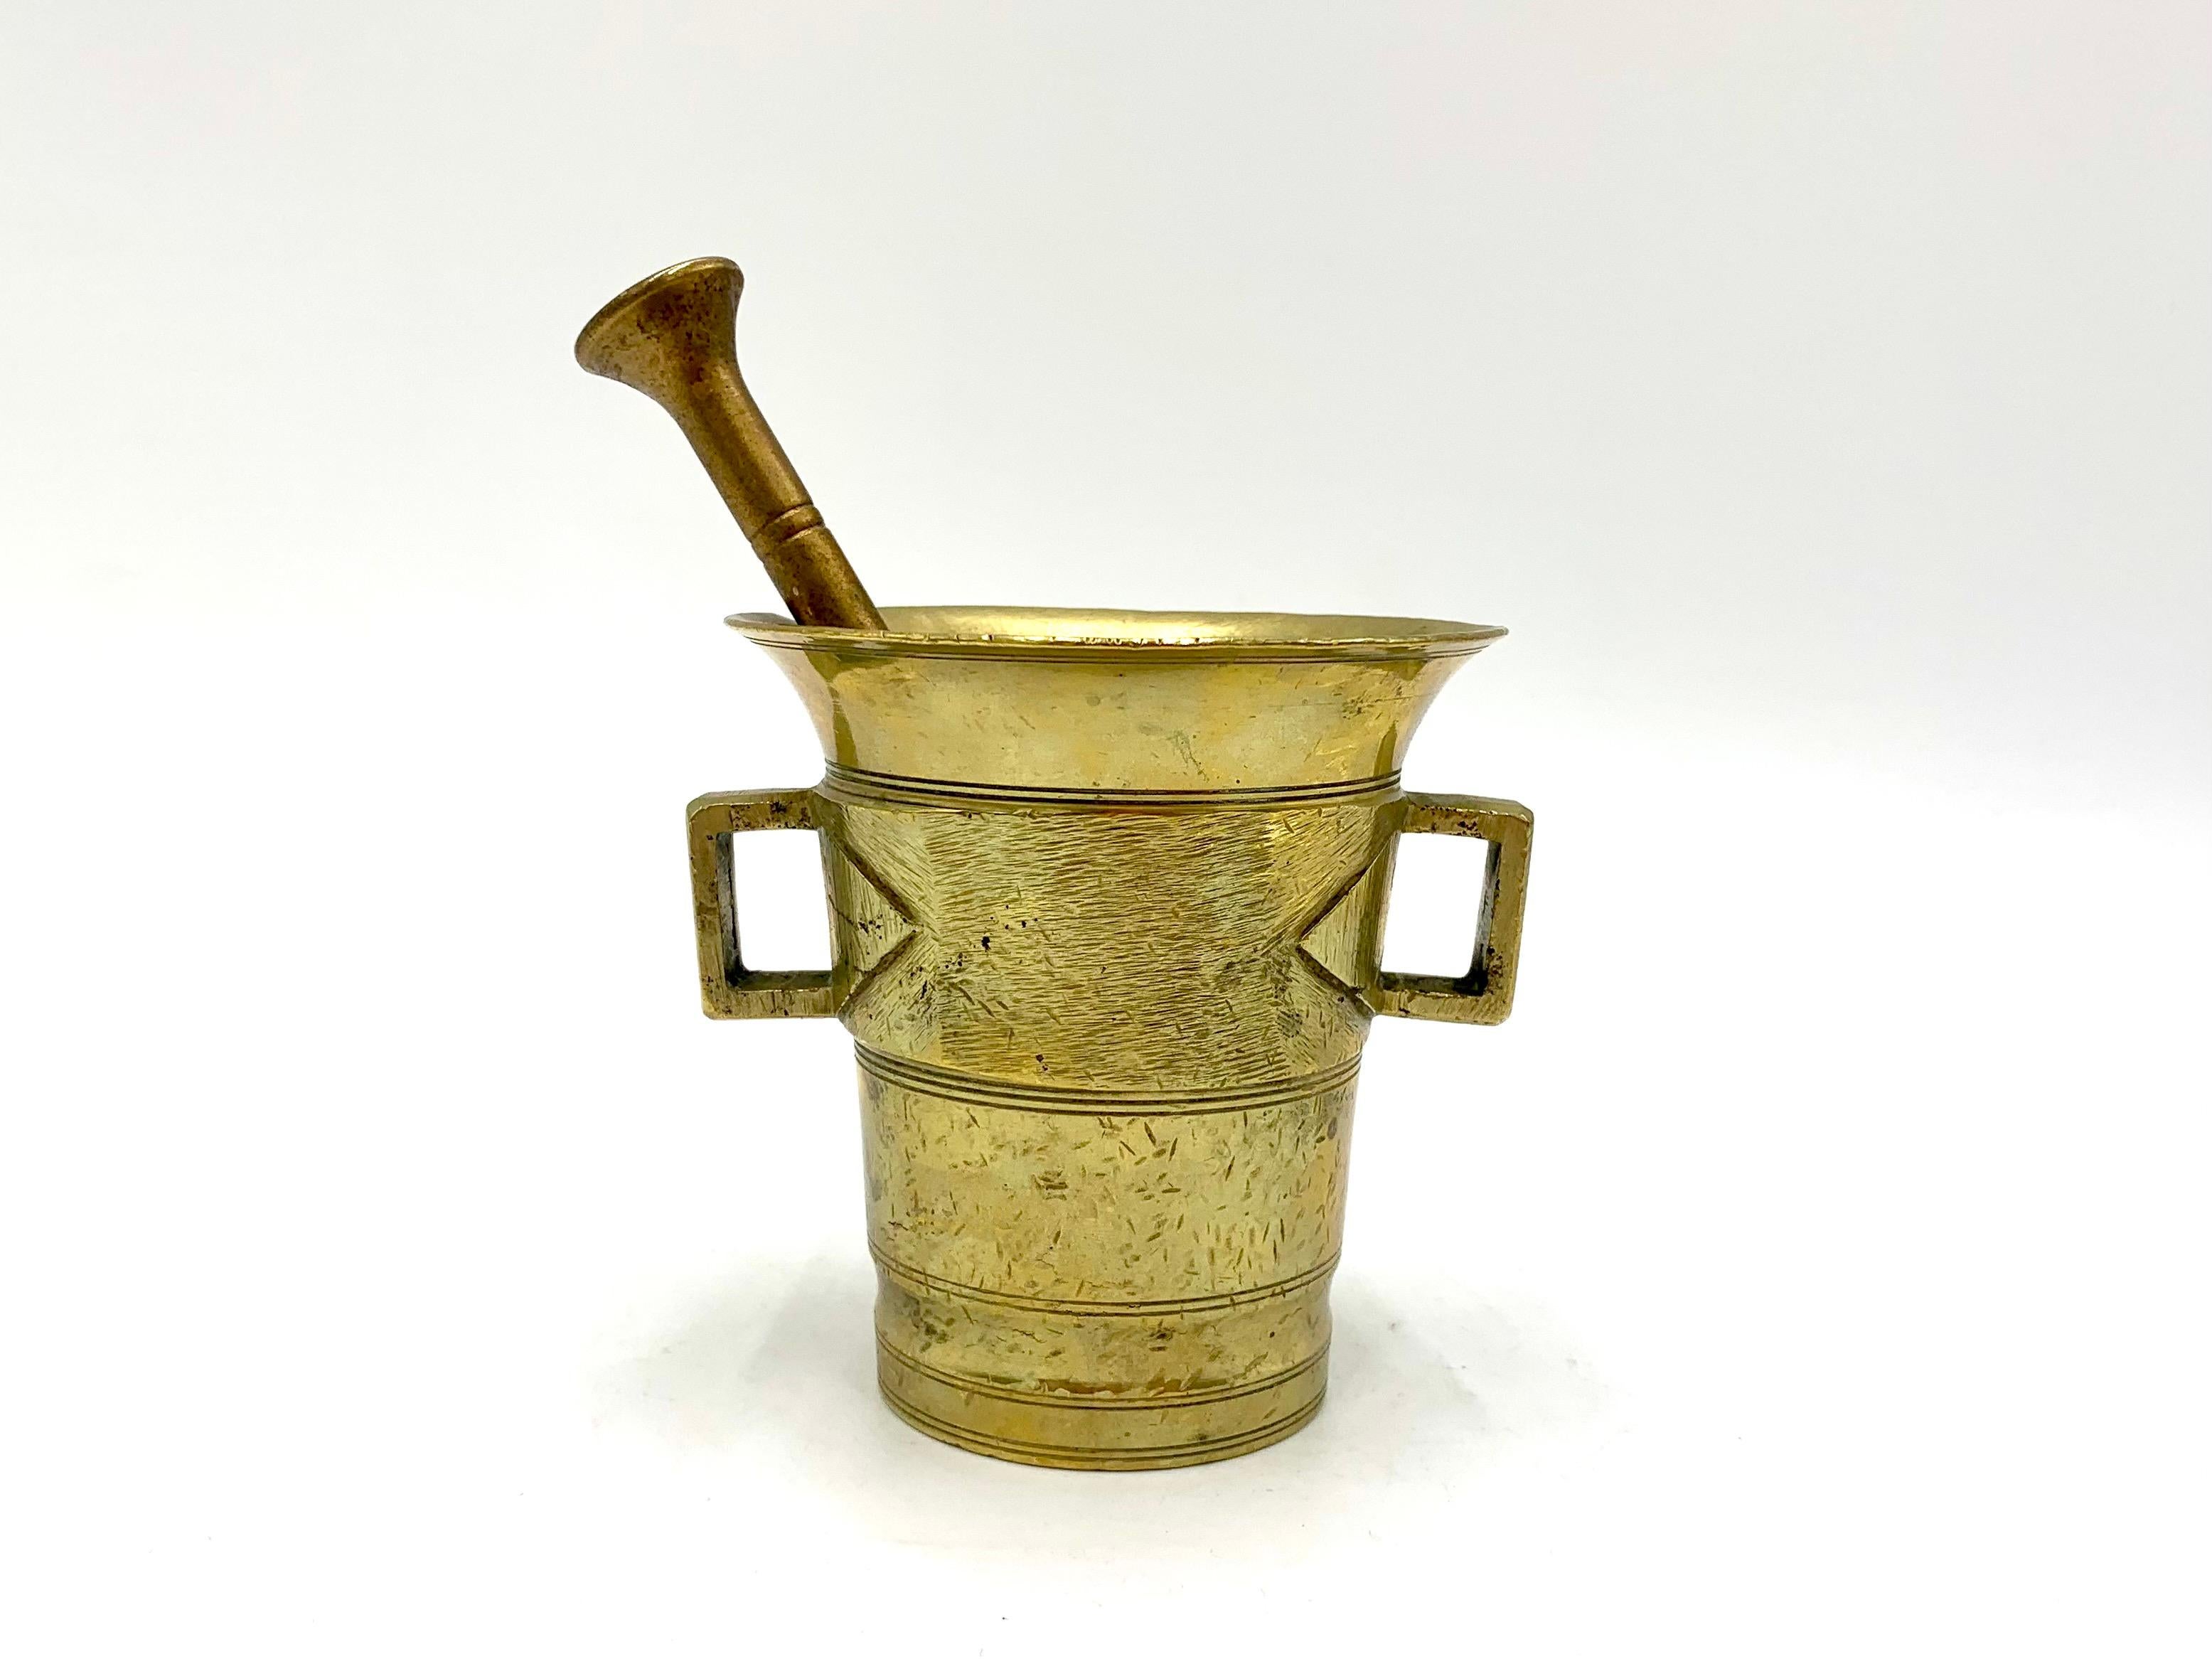 Brass mortar and pestle

Measures: height 9.5 cm, diameter 9.5 cm.